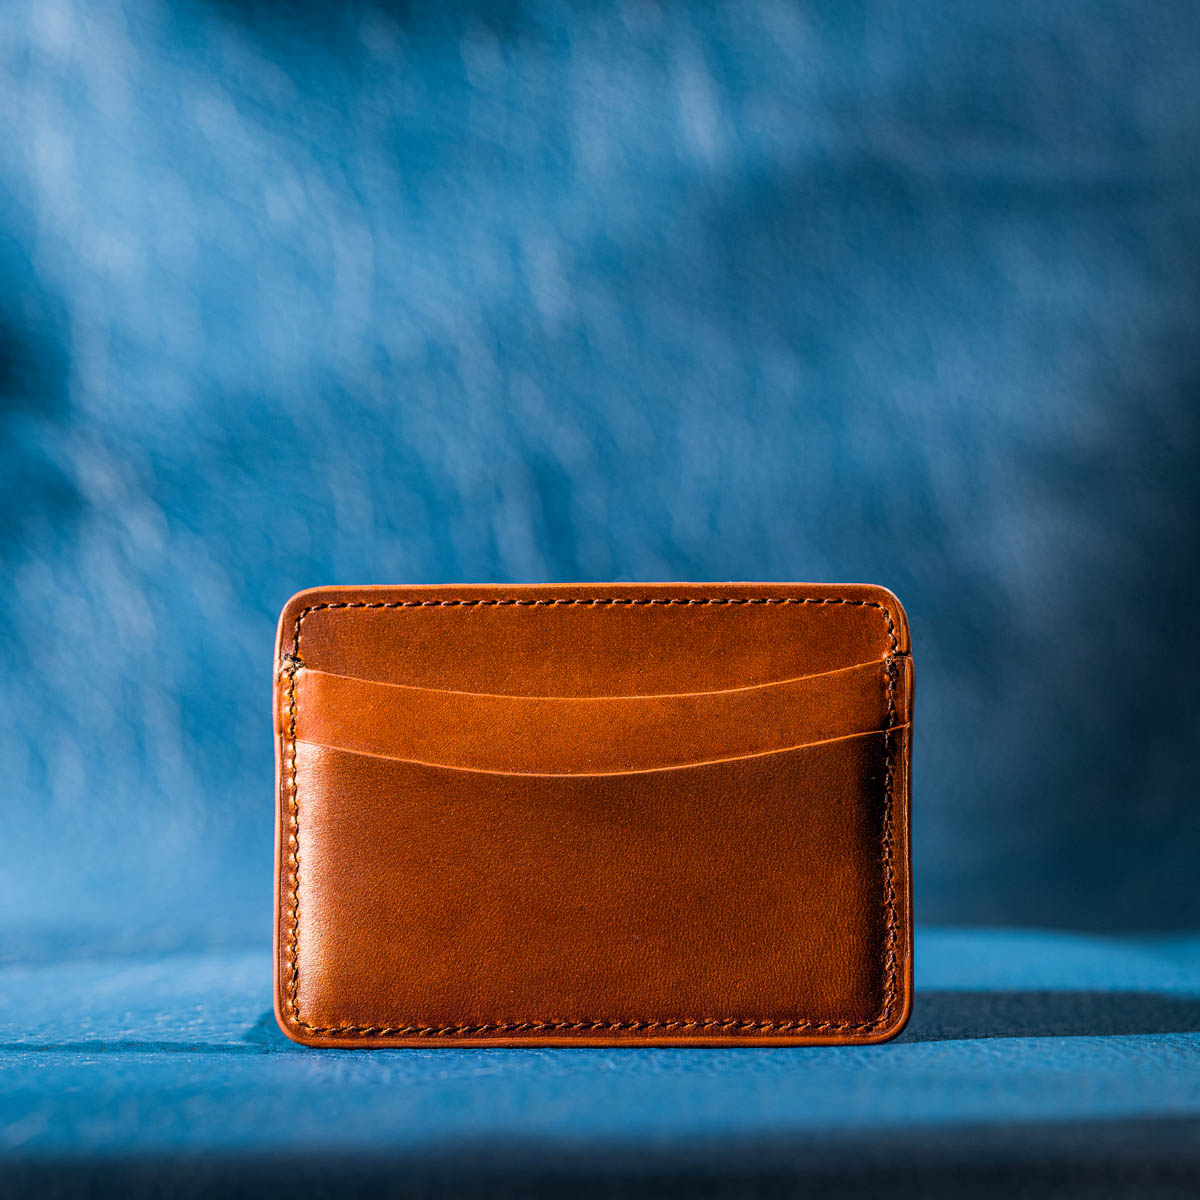 Wallet in Orange Calfskin